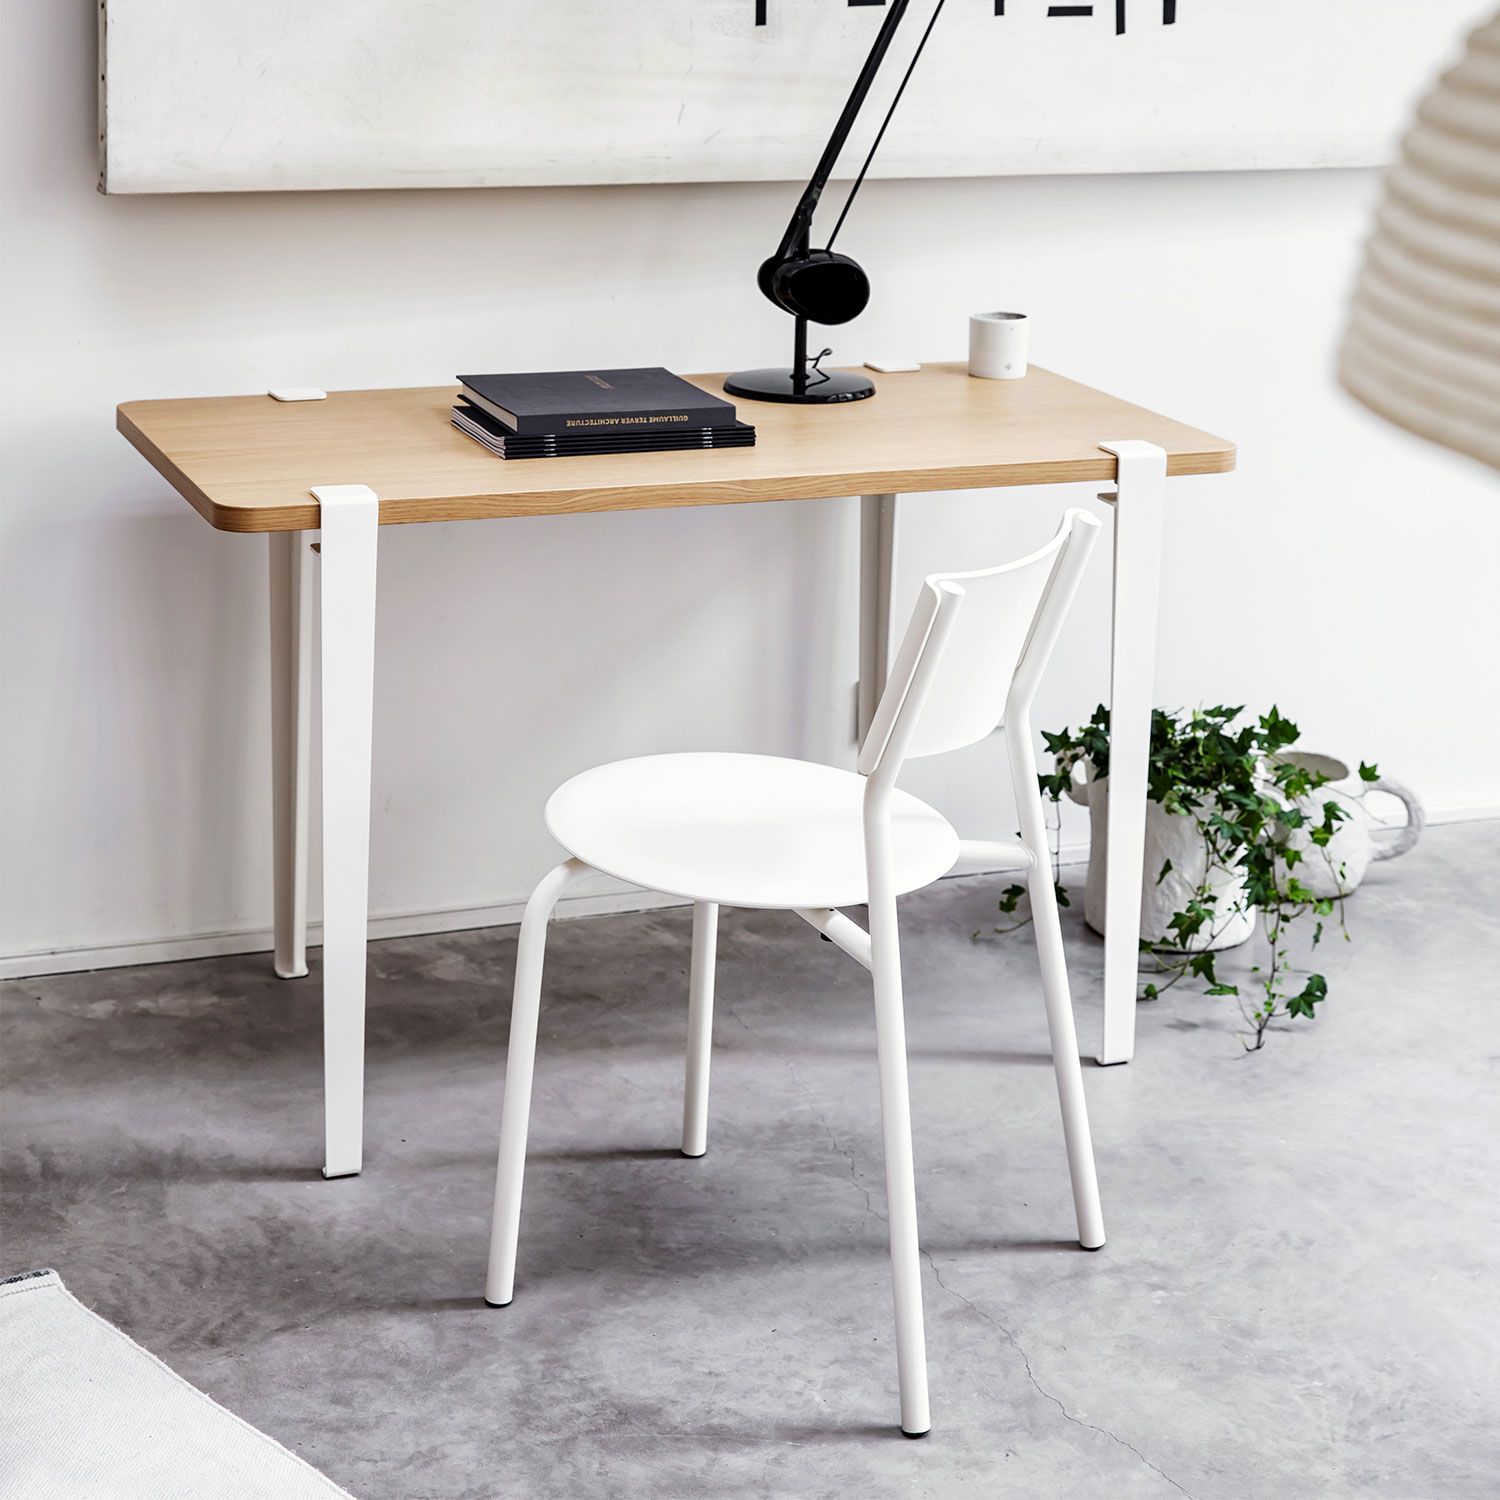 Table and desk leg – 75 cm